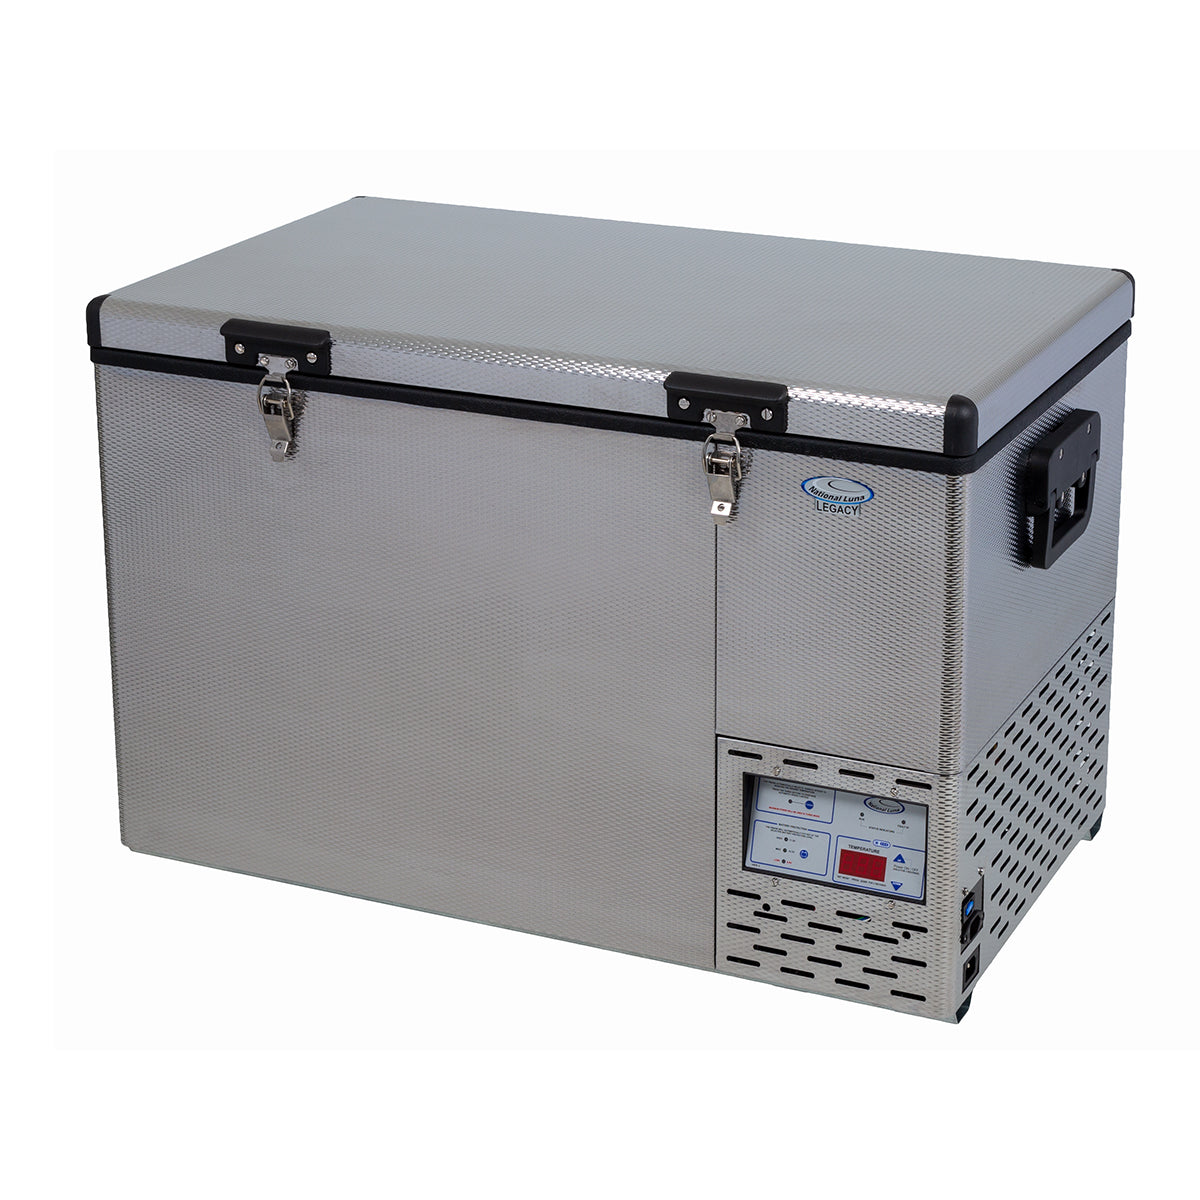 National Luna Legacy 80 | Stainless Steel Refrigerator & Freezer | New Model